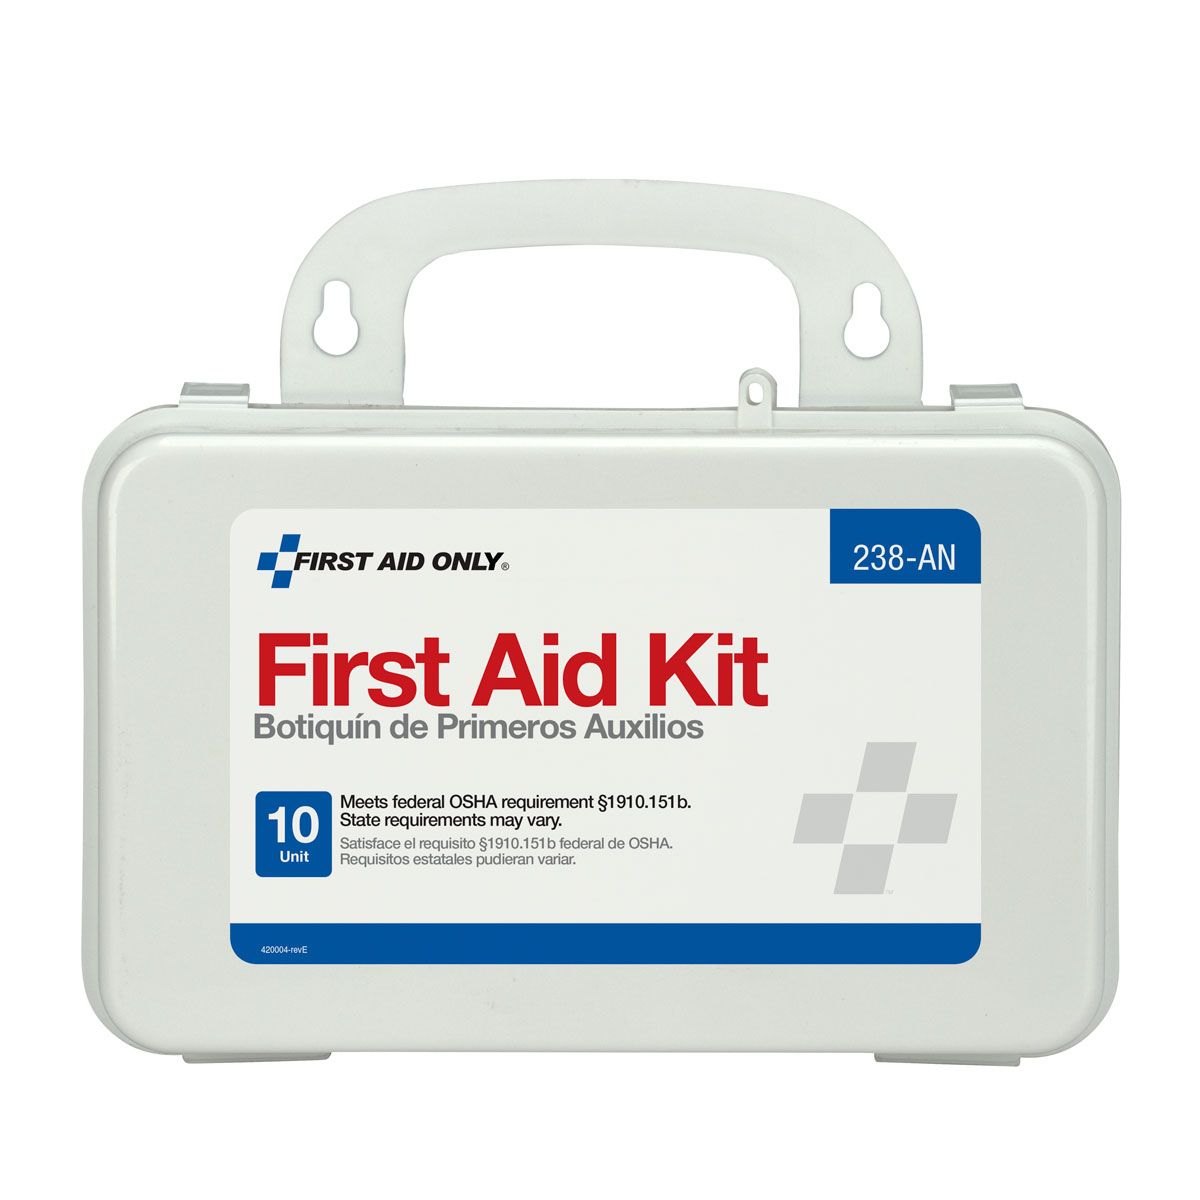 10 Unit First Aid Kit, Plastic Case - W-238-AN